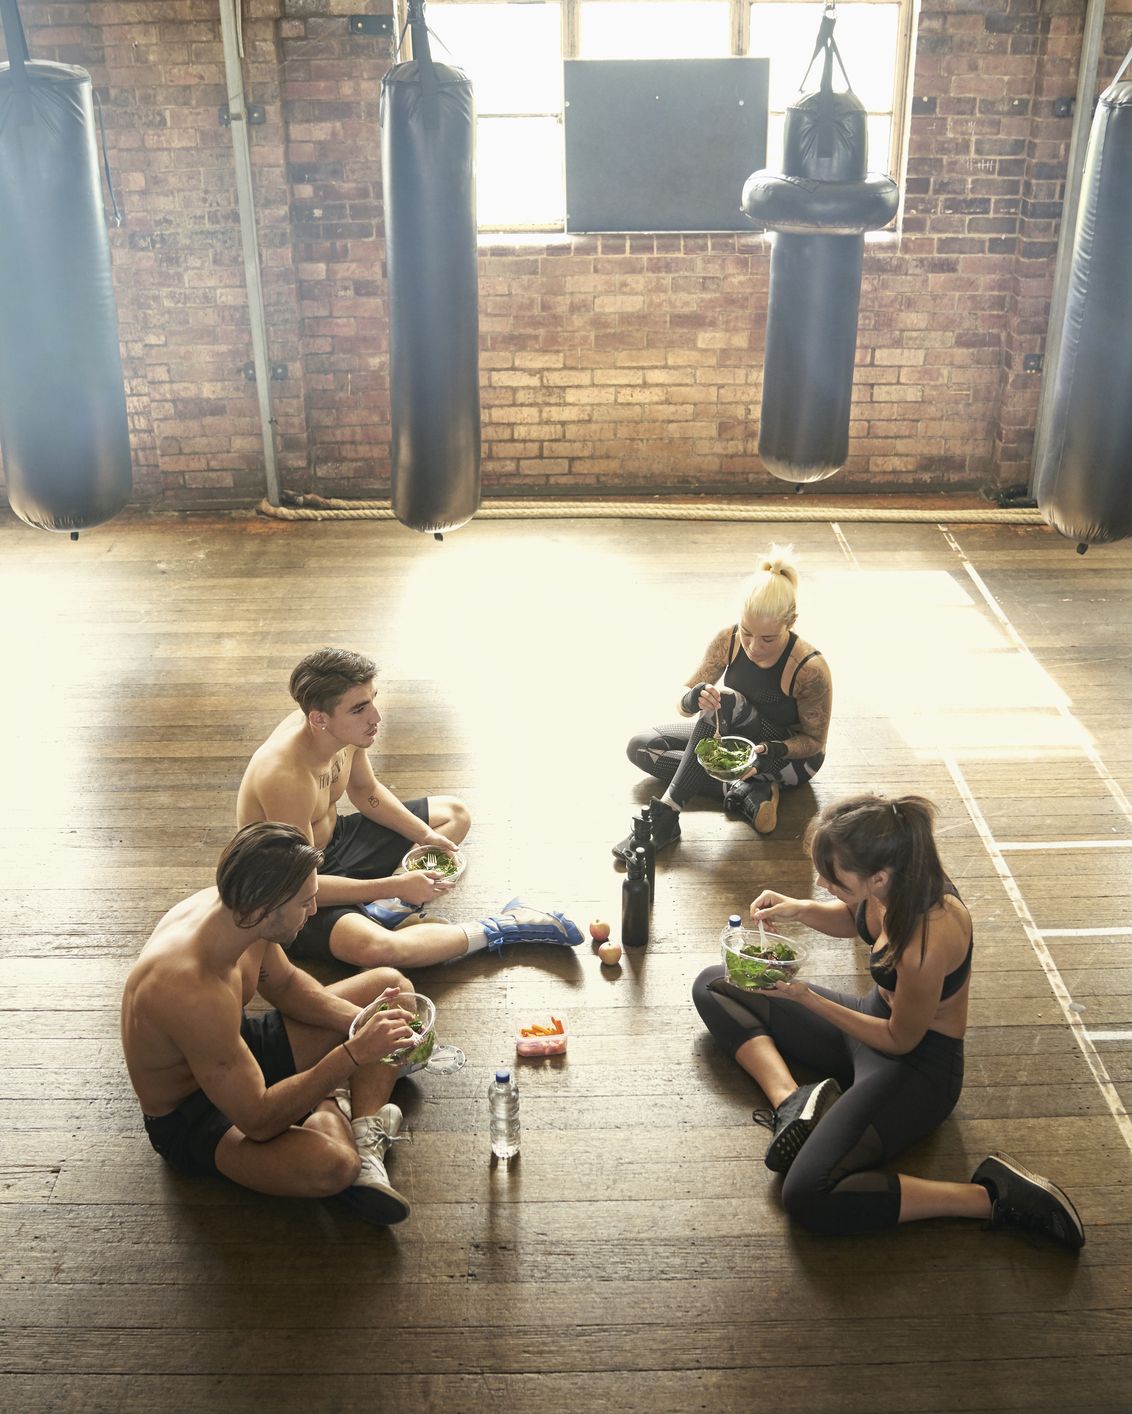 People sitting on floor in gymnasium eating salads